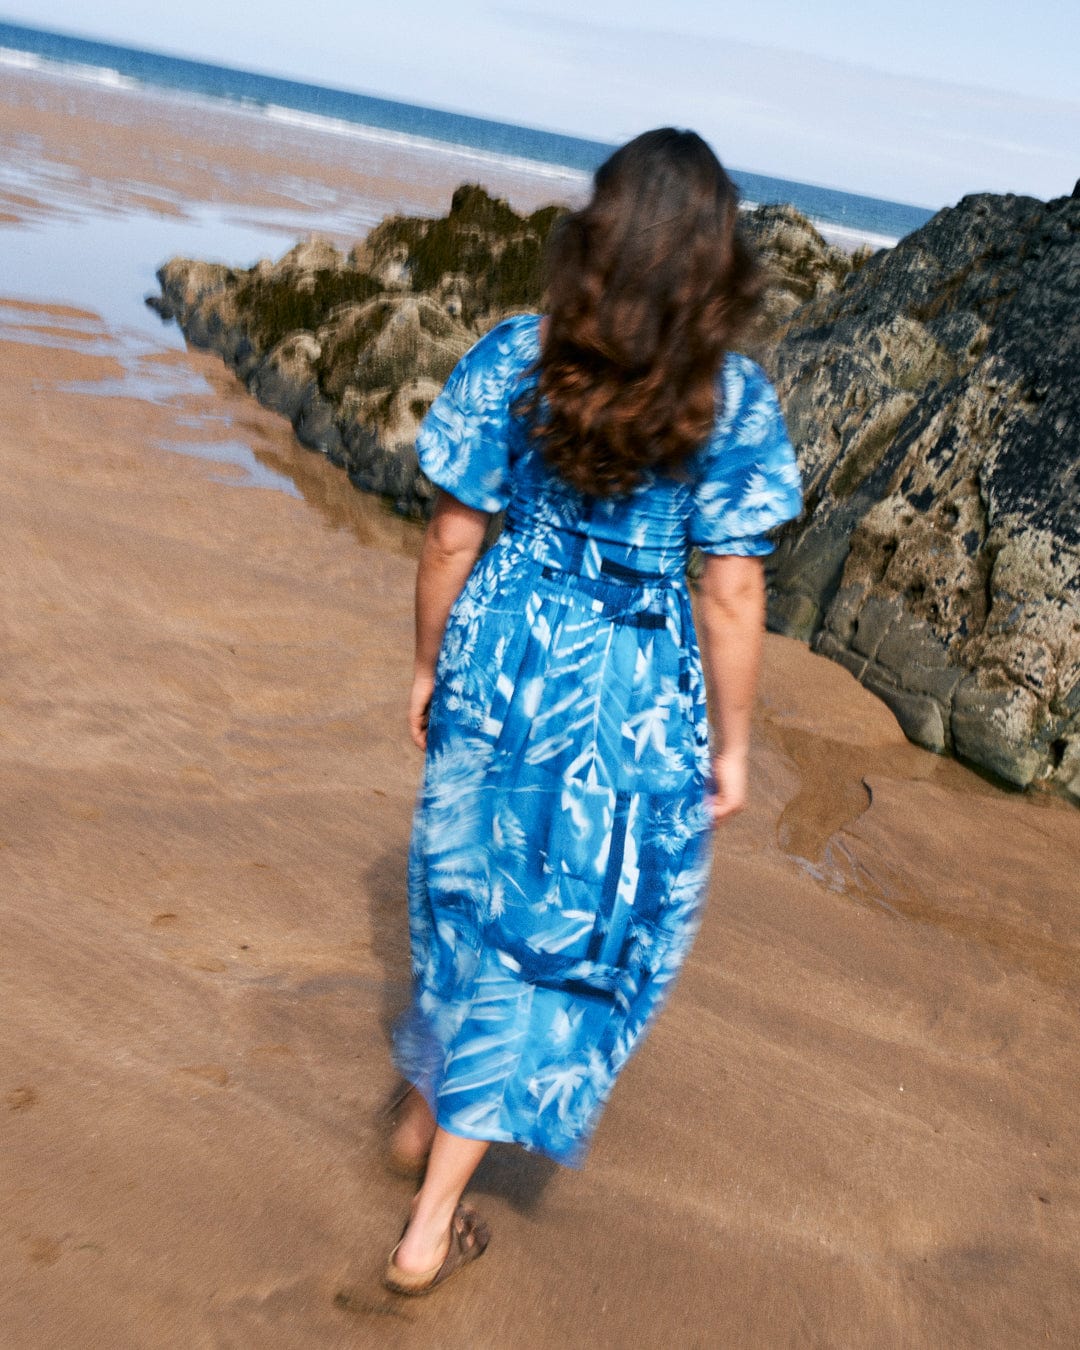 A person with long hair, wearing a Larran Cyanotype - Midi Woven Dress - Blue from Saltrock, walks barefoot on a sandy beach near rocky formations.